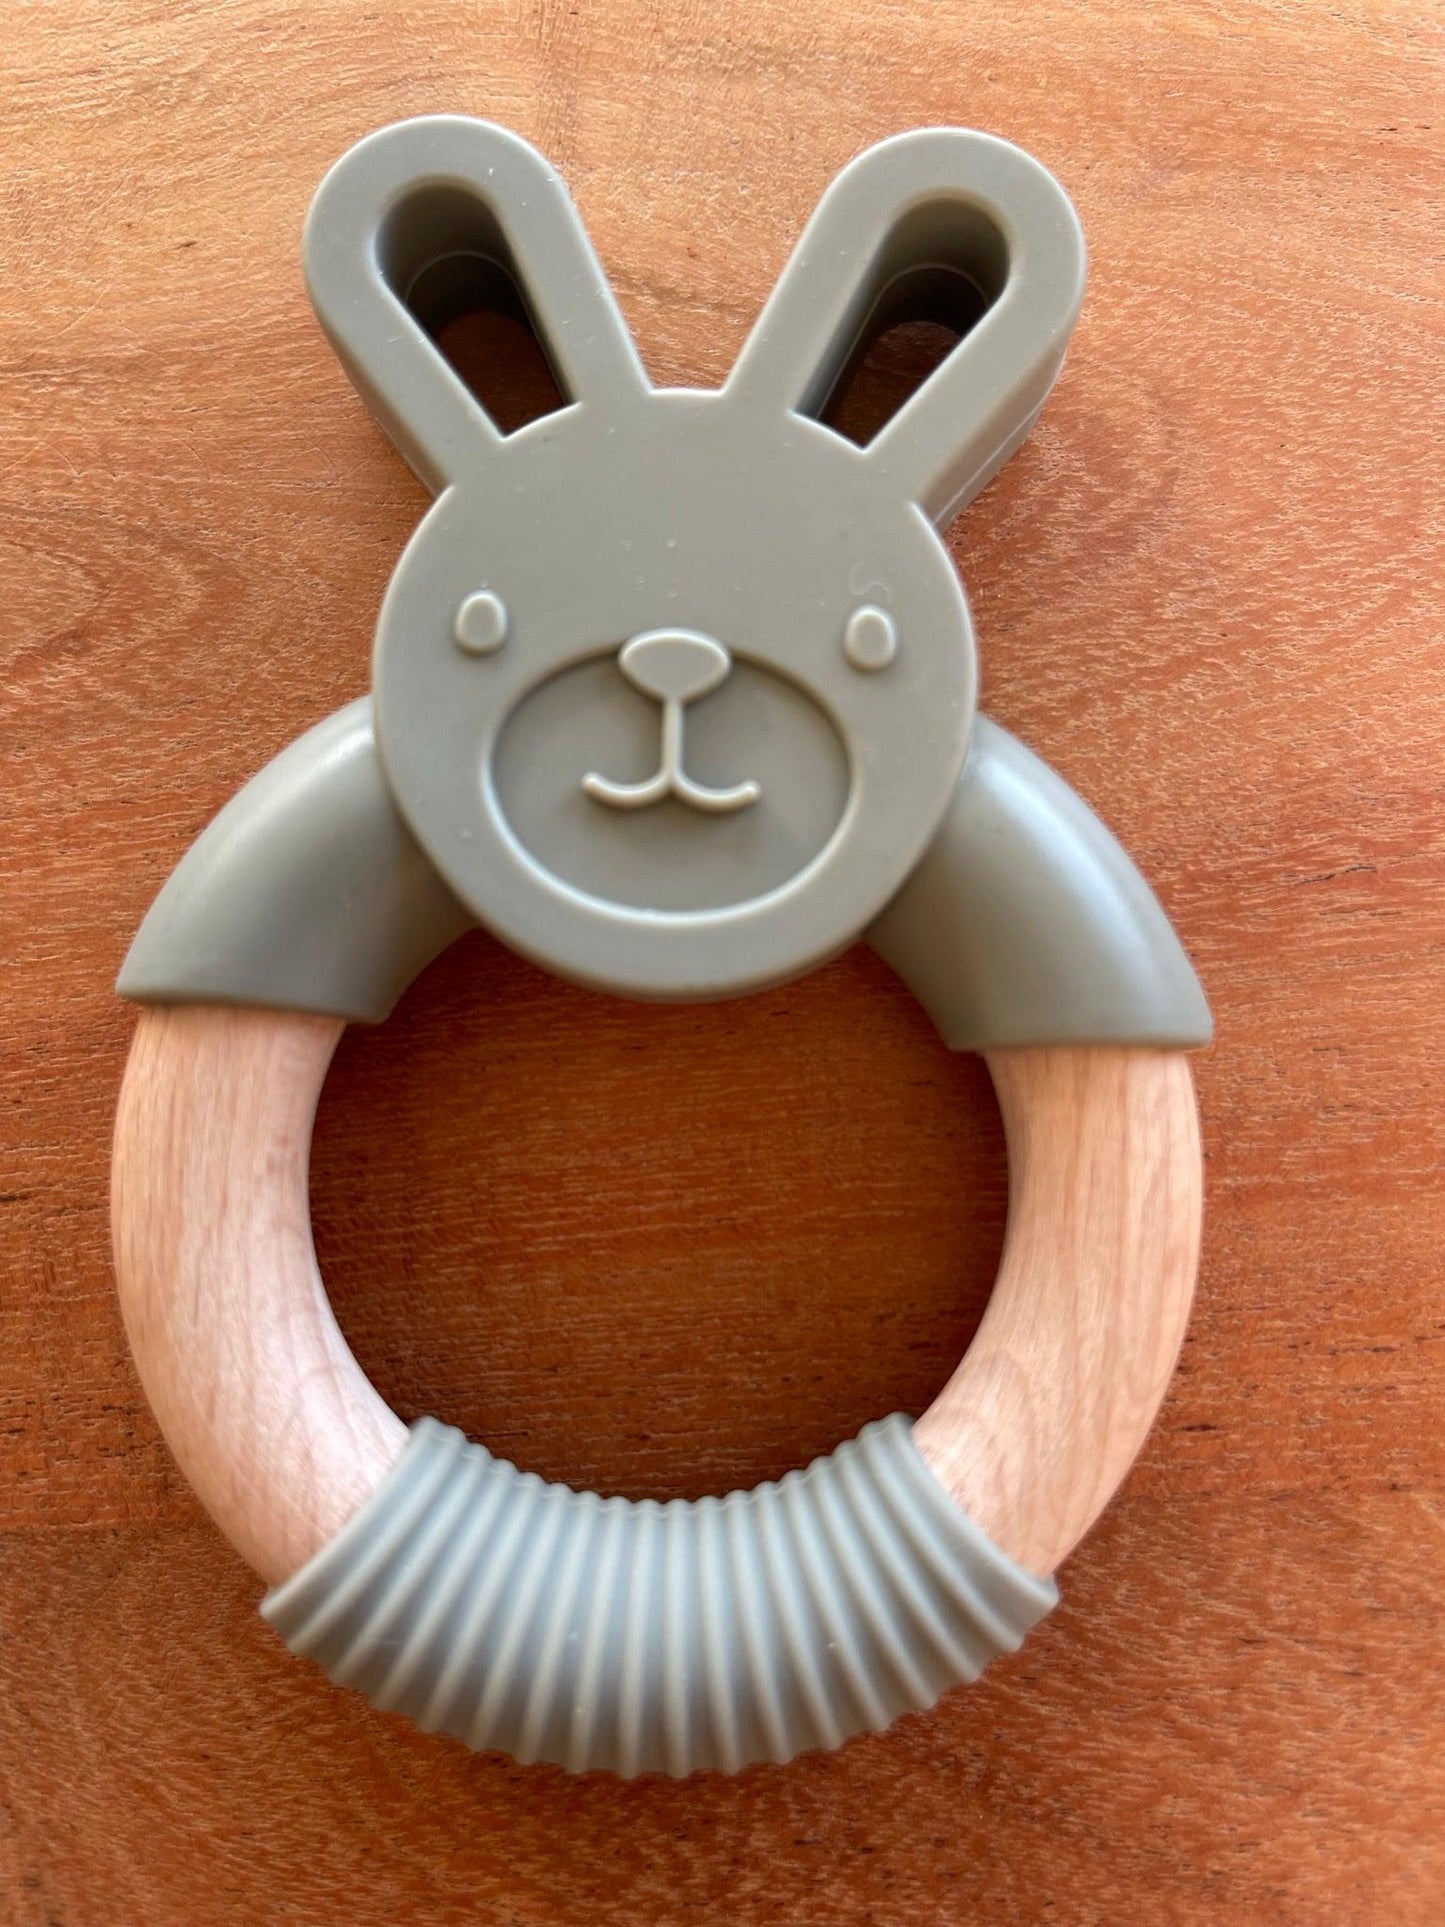 Yoho Baby & co. Silicone Teething Ring - cute rabbit, sage green